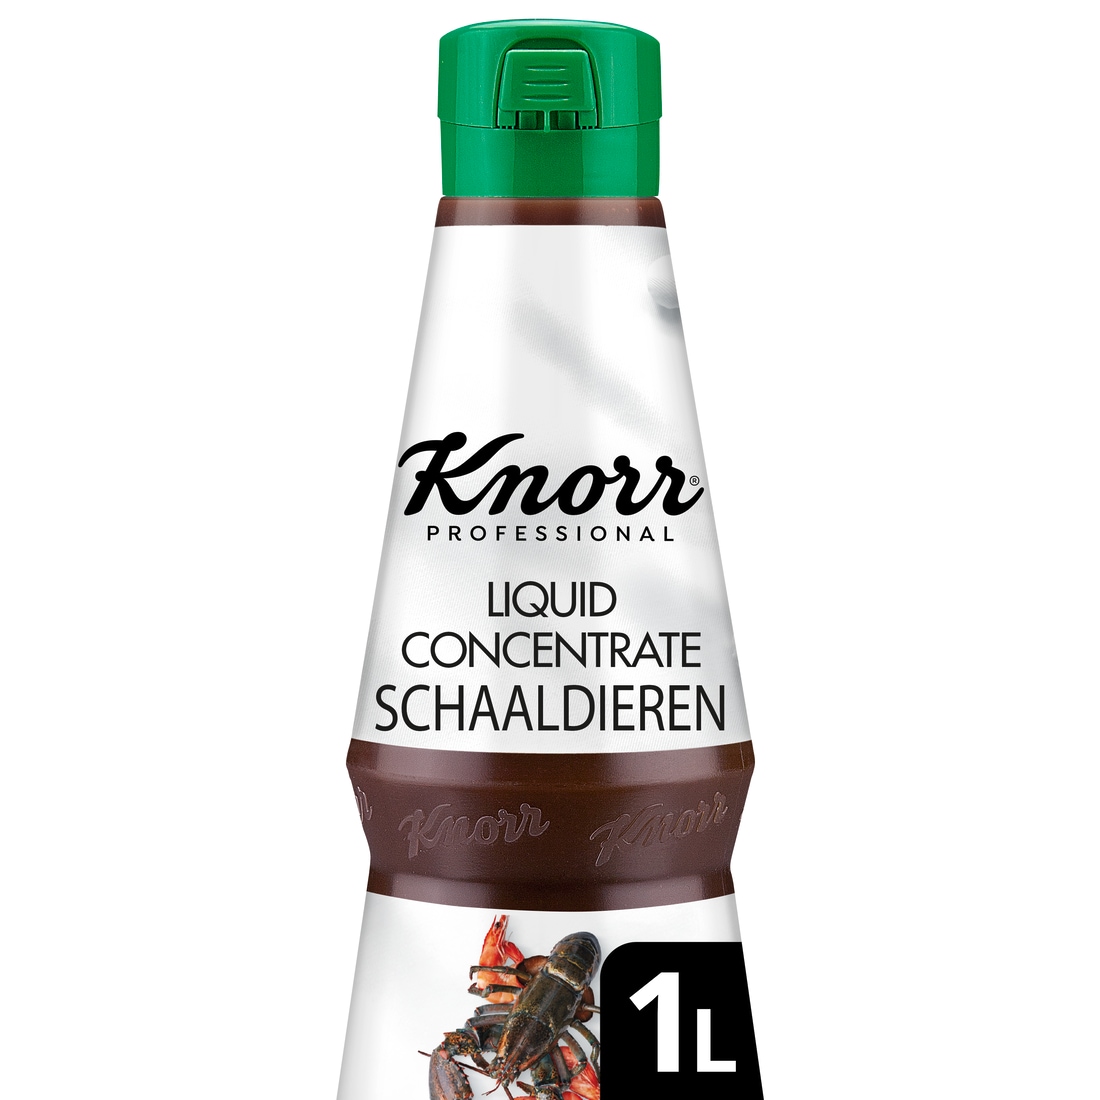 Knorr Professional Liquid Concentrate Schaaldieren 1L